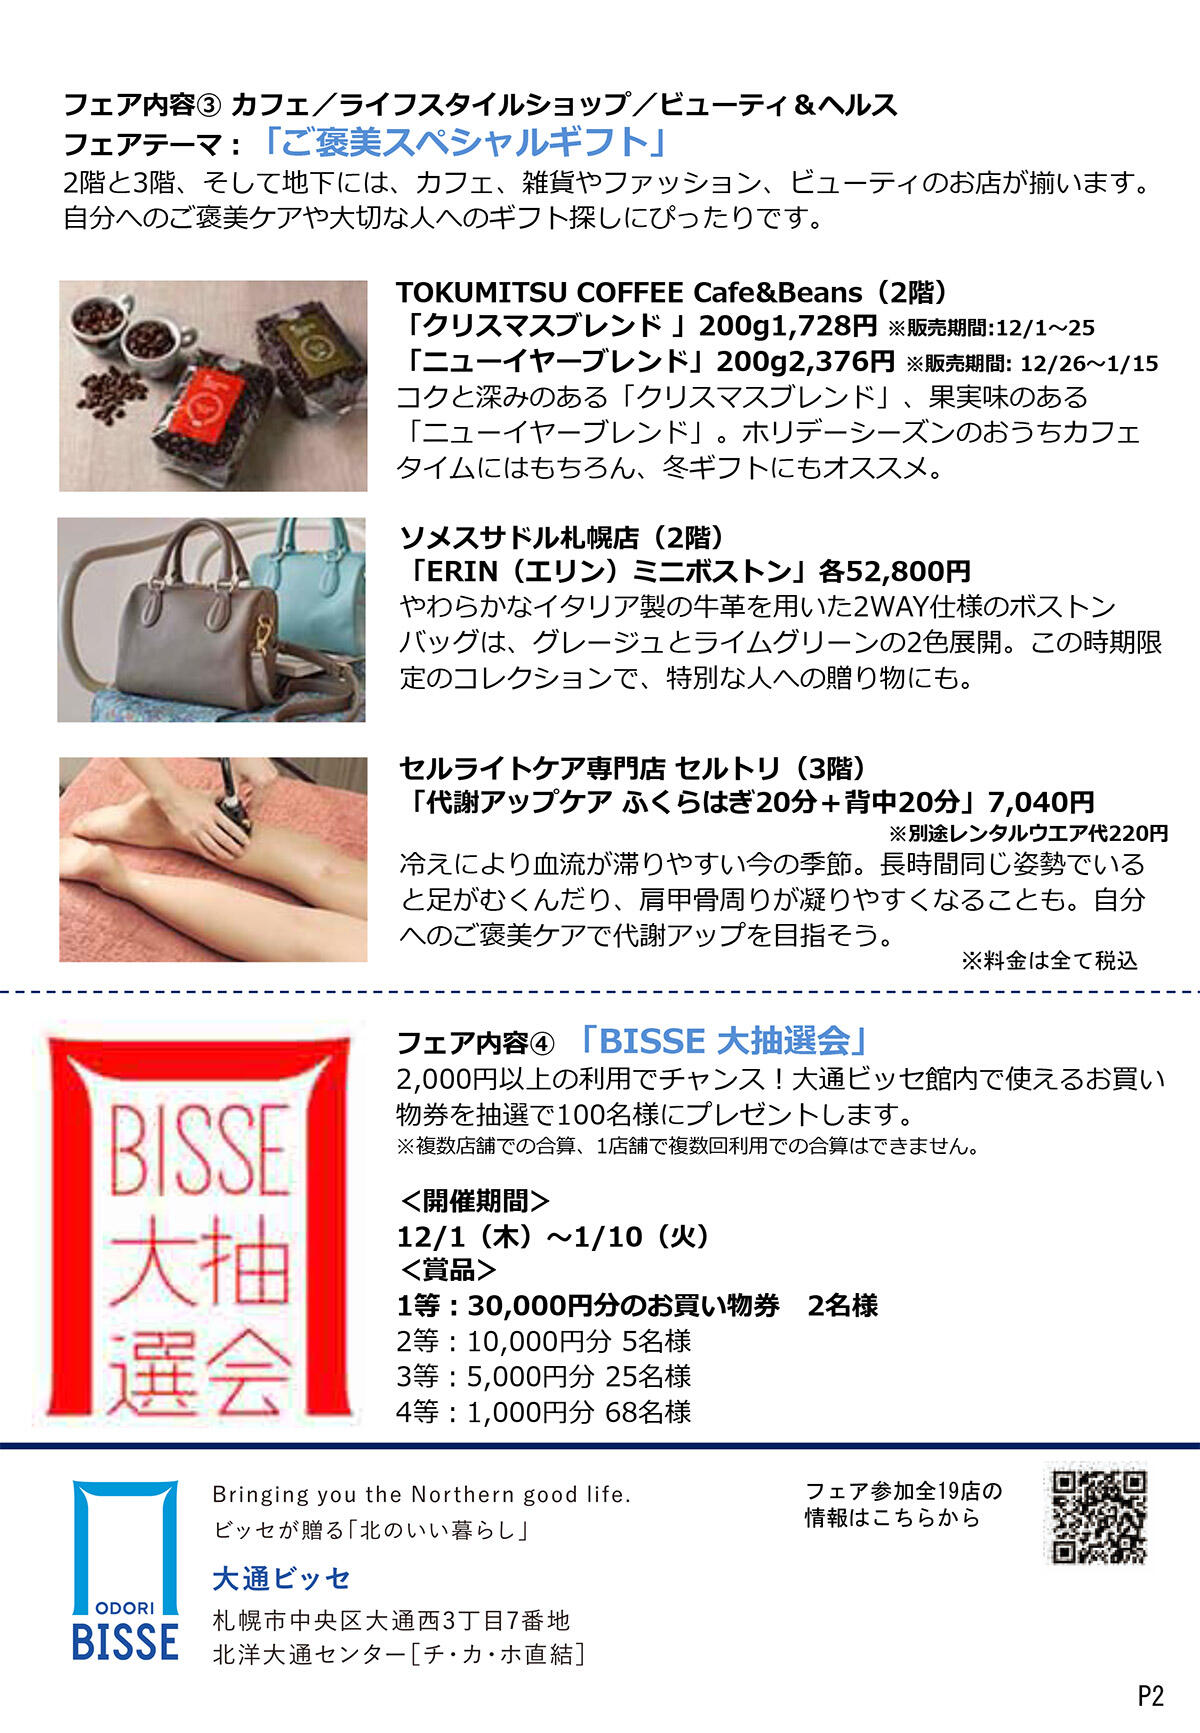 https://www.odori-bisse.com/info/news_221117_img3.jpg